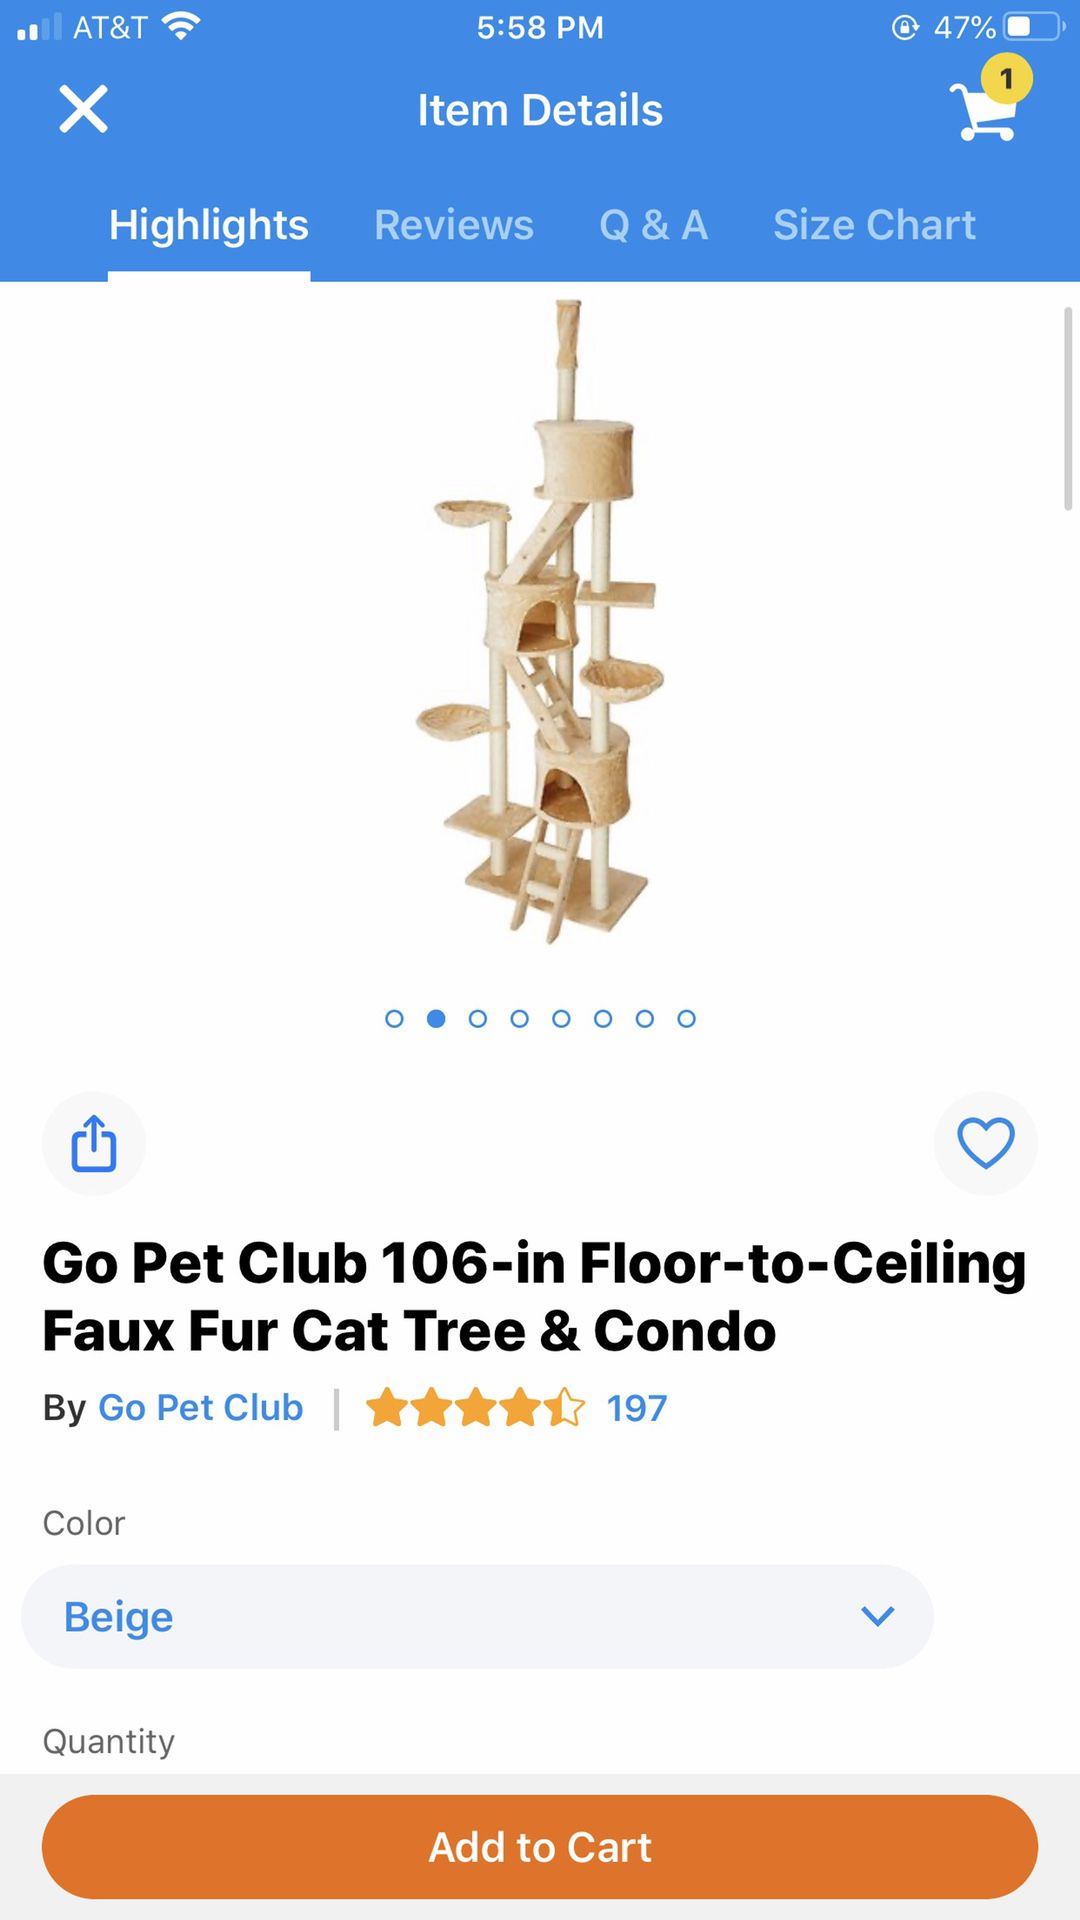 Go Pet Club 106 in Floor to Ceiling Faux Fur Cat Tree and Condo